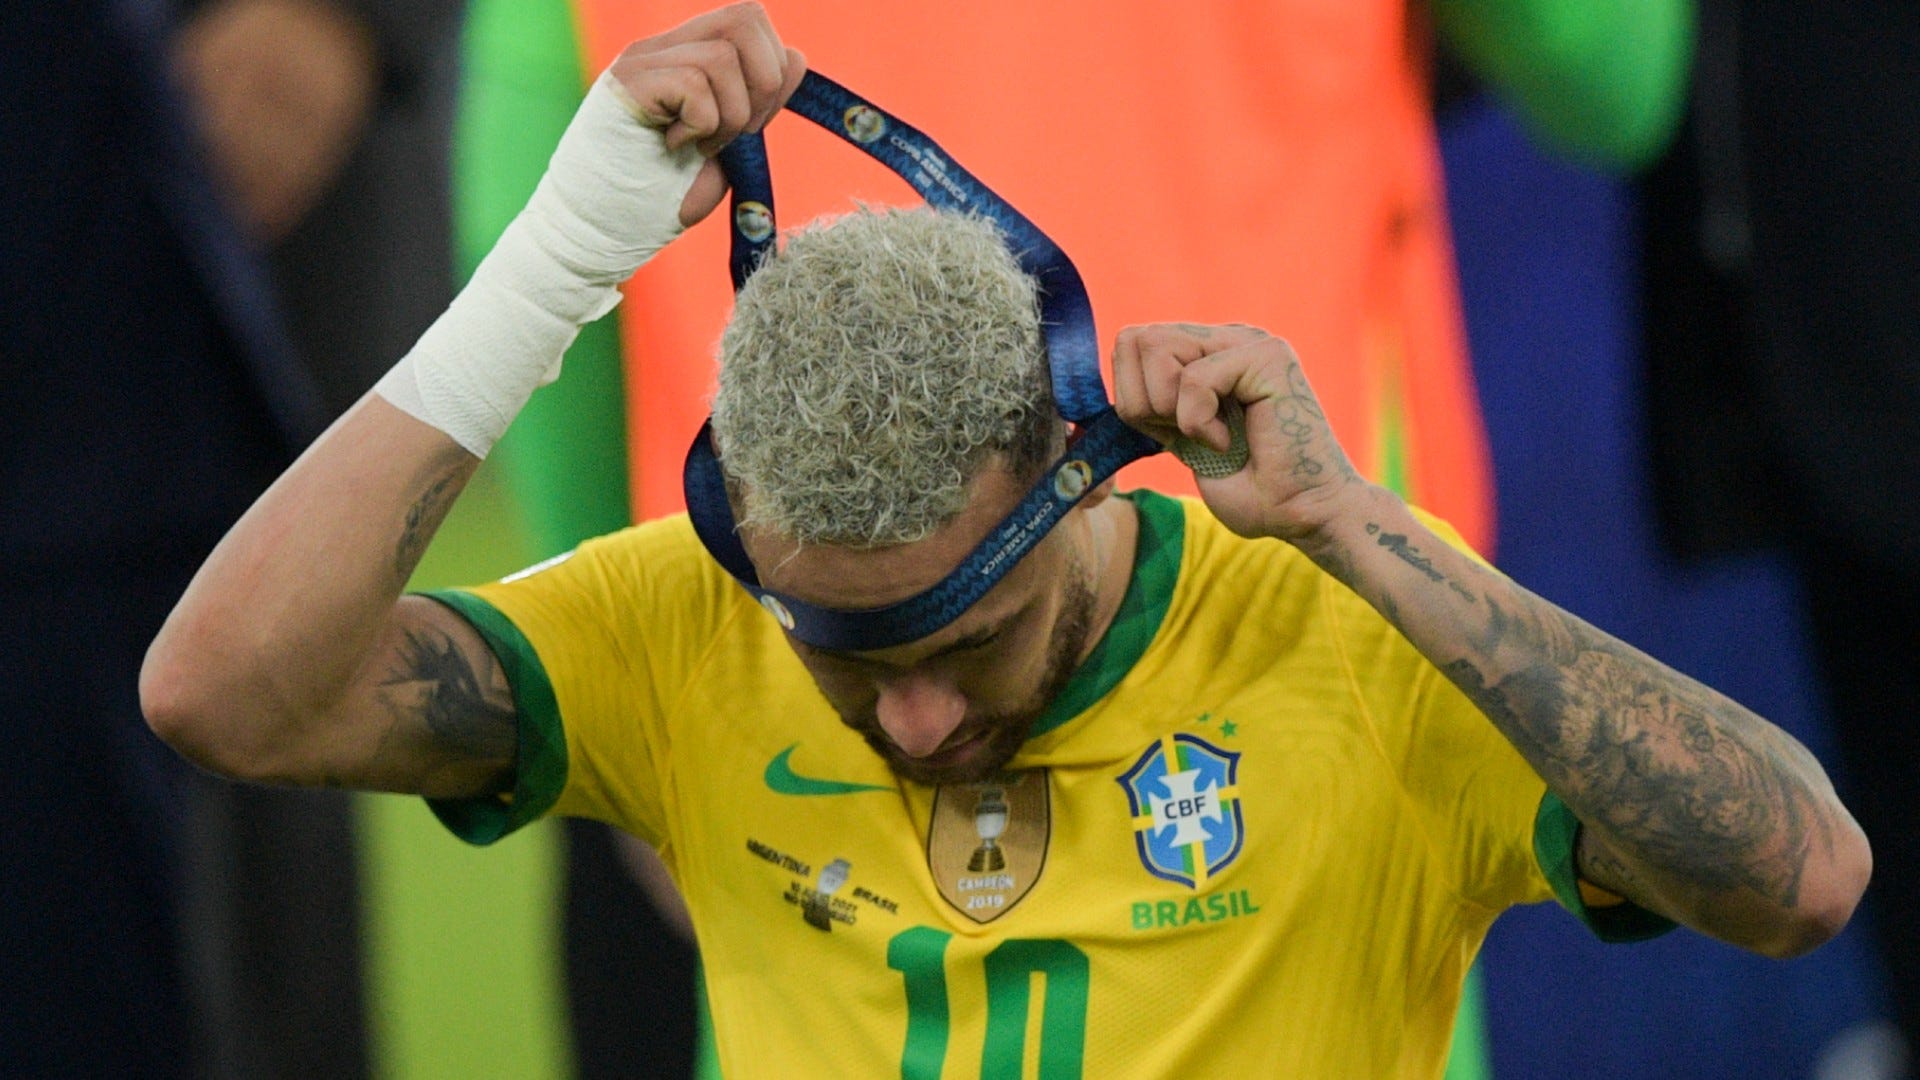 Neymar Brazil Copa America 2021 medal